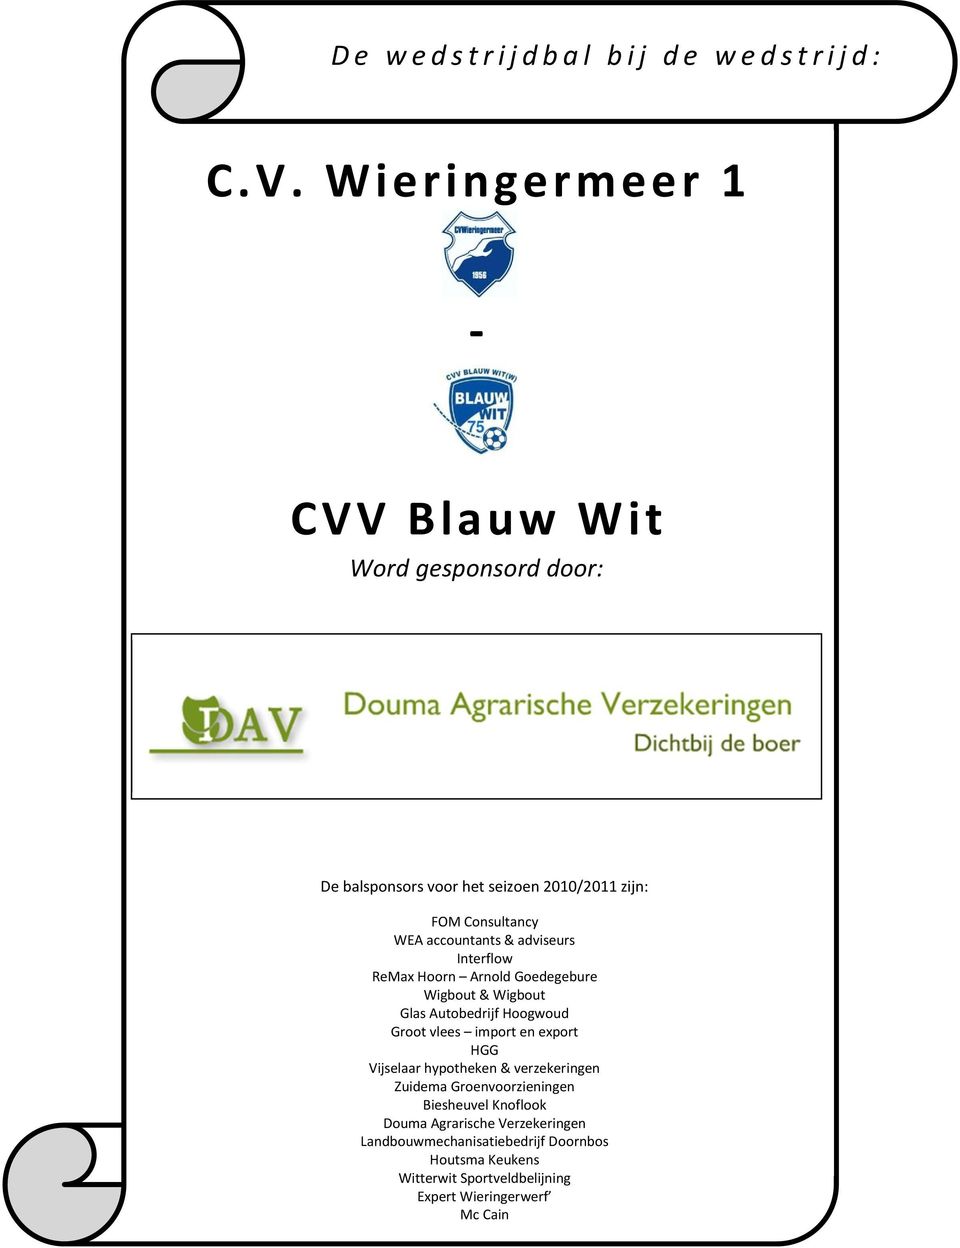 accountants & adviseurs Interflow ReMax Hoorn Arnold Goedegebure Wigbout & Wigbout Glas Autobedrijf Hoogwoud Groot vlees import en